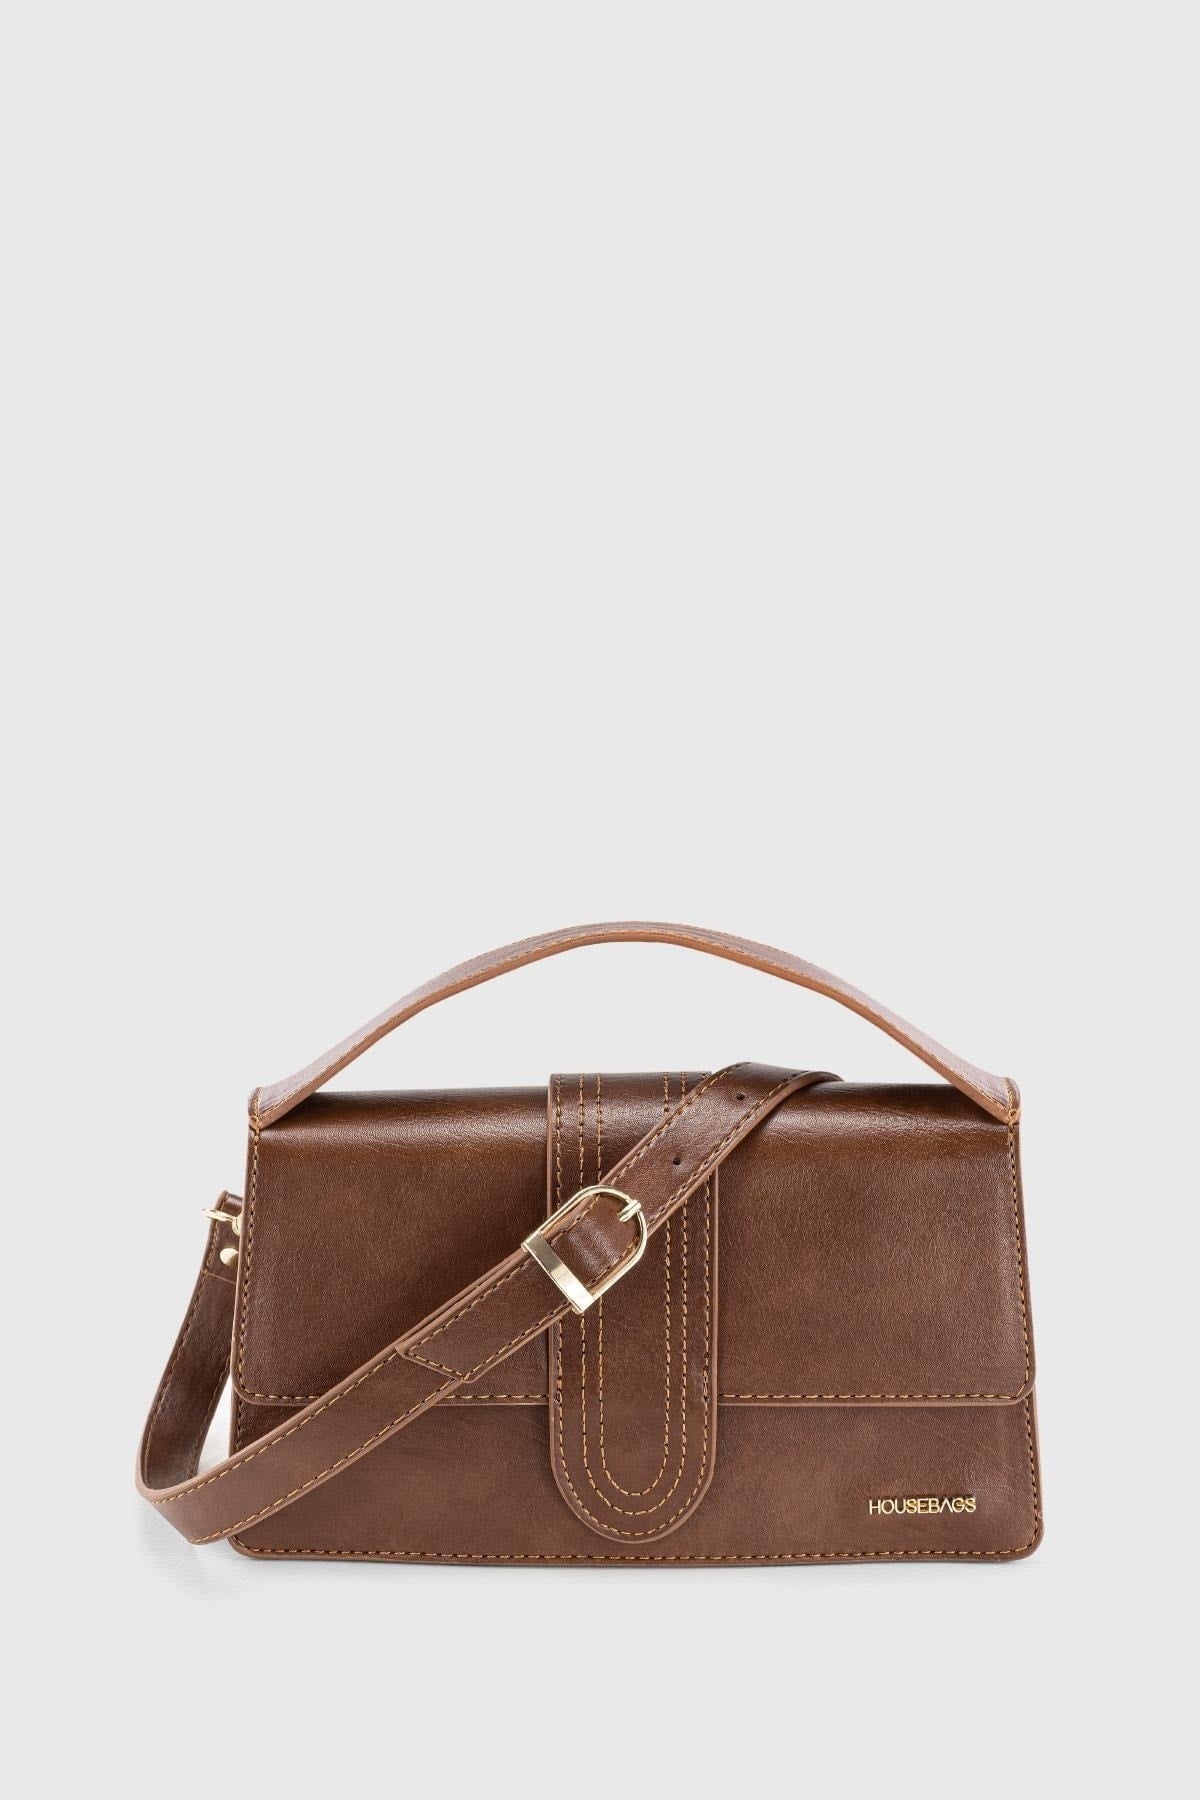 Women's Brown Leather Look Adjustable Crossbody Bag 229